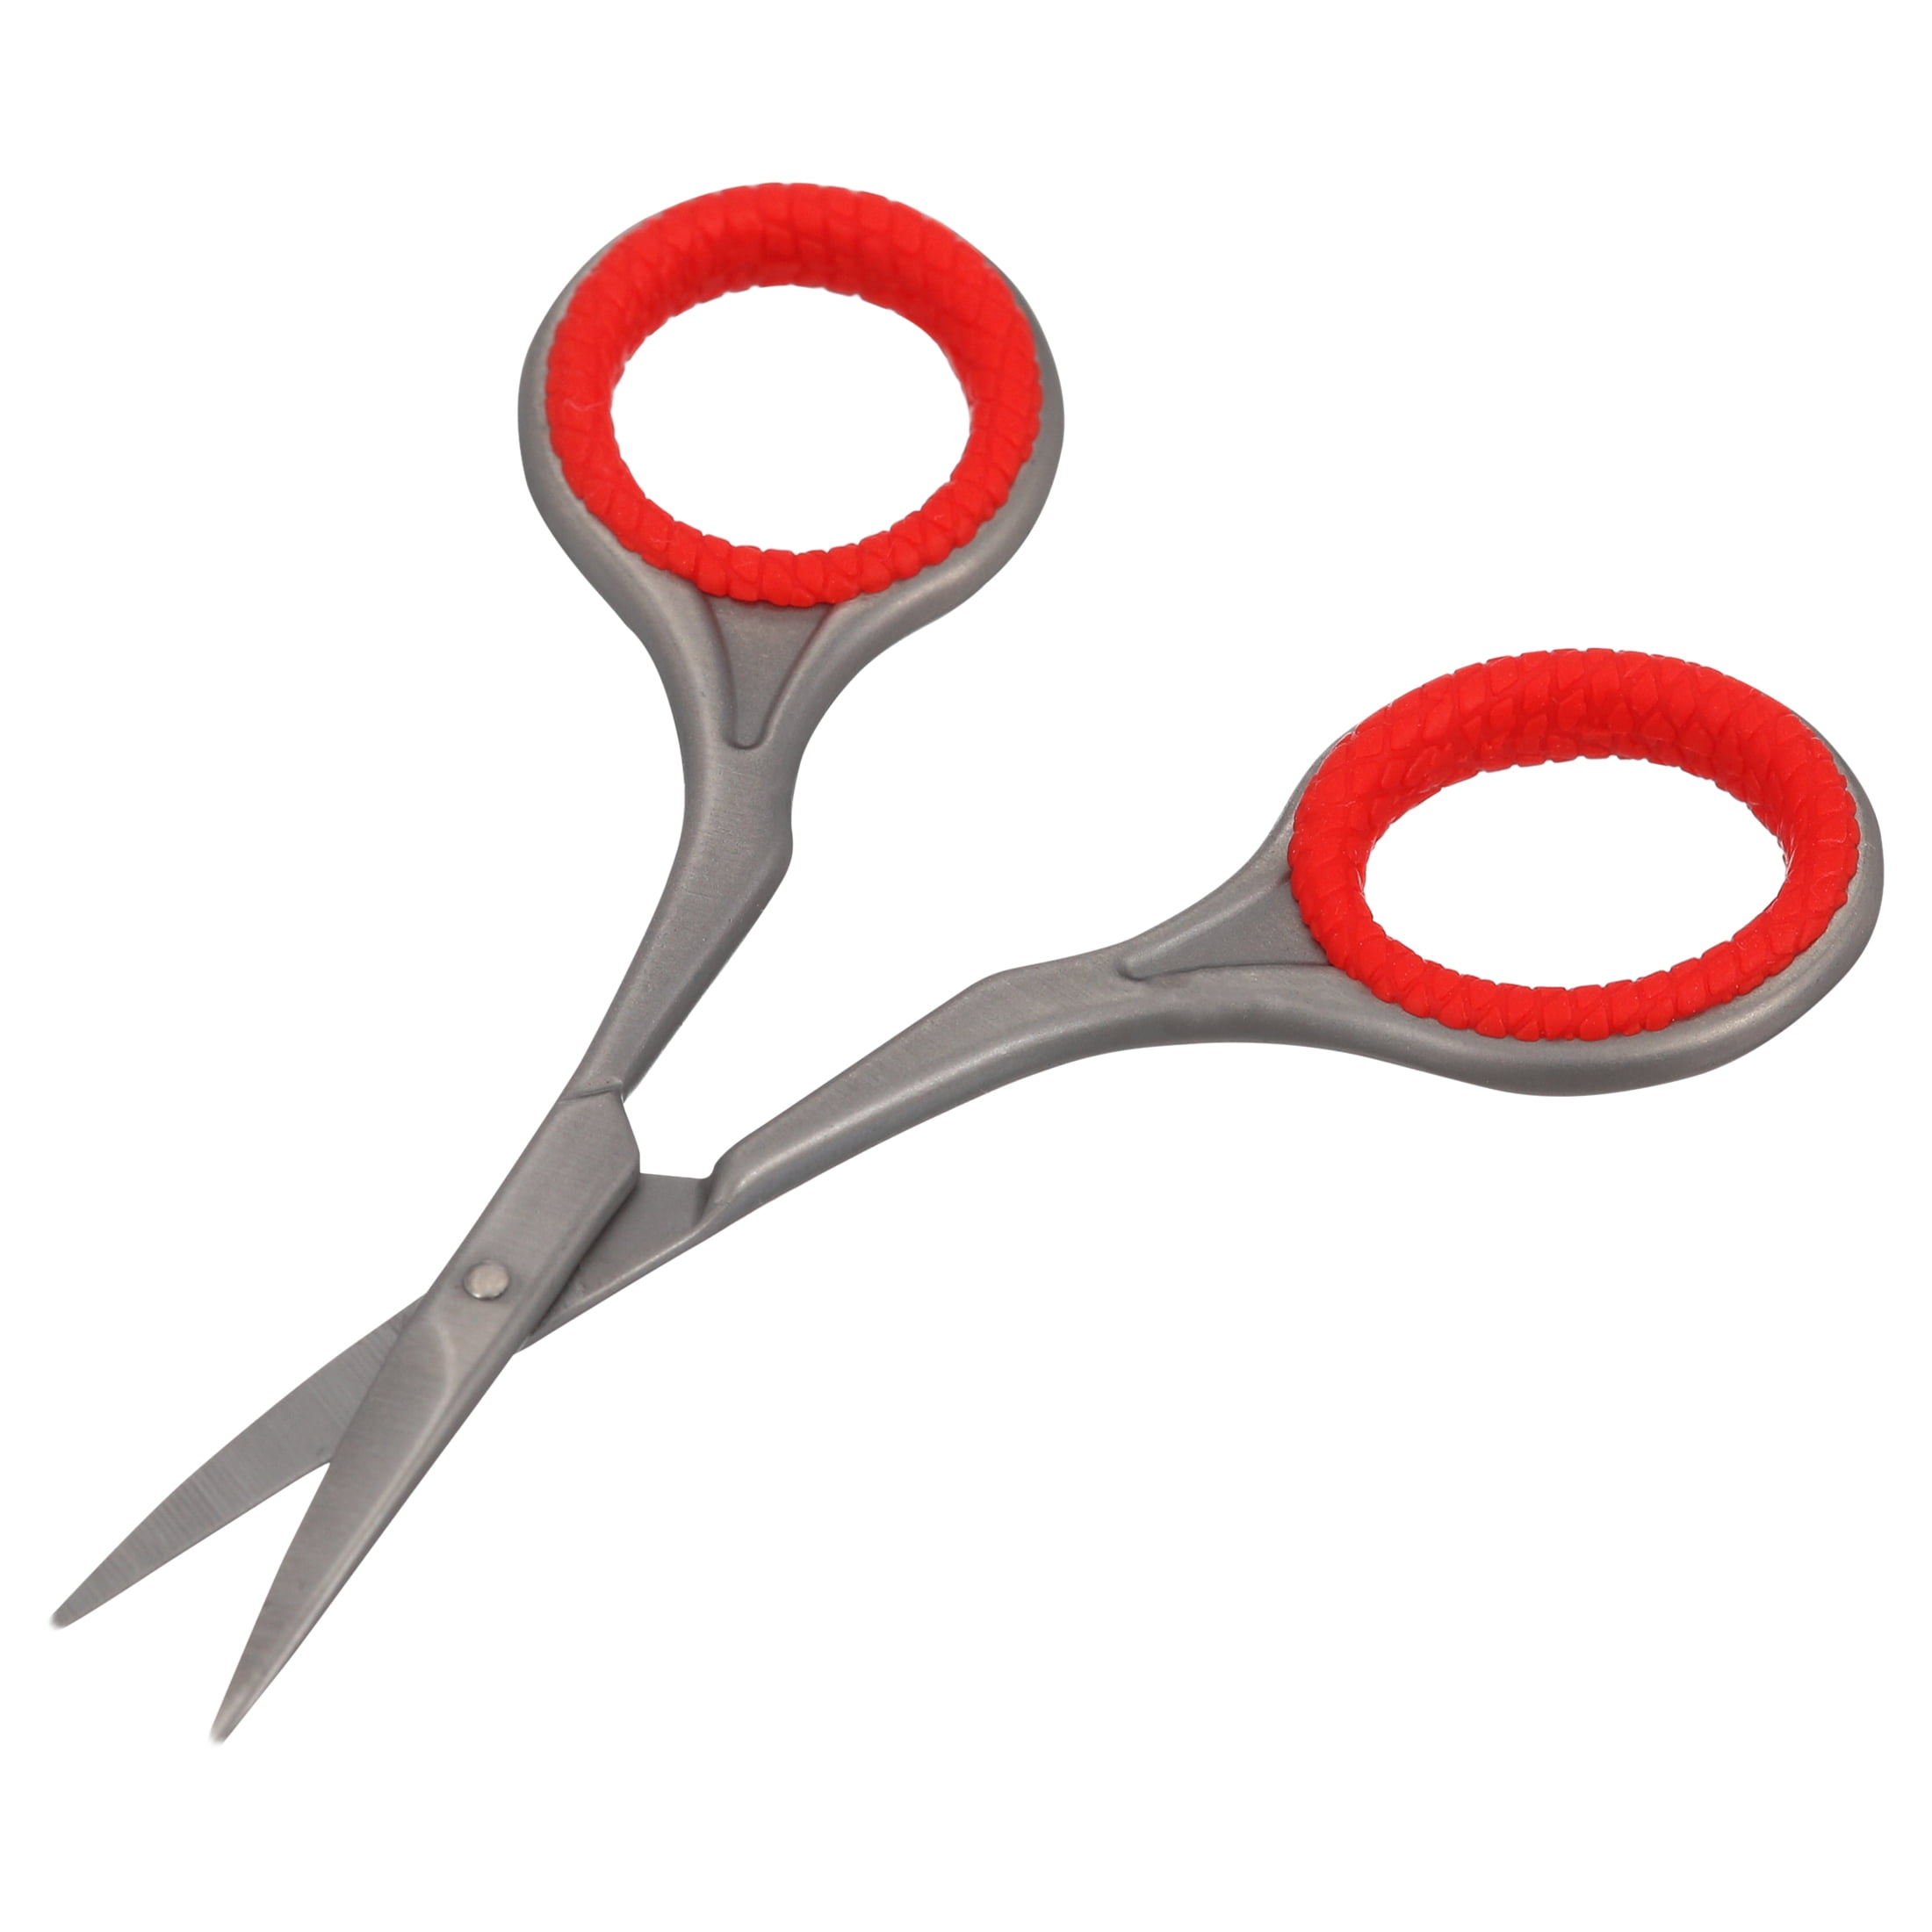 Curved Matte Chrome Nail Scissors, Order Online